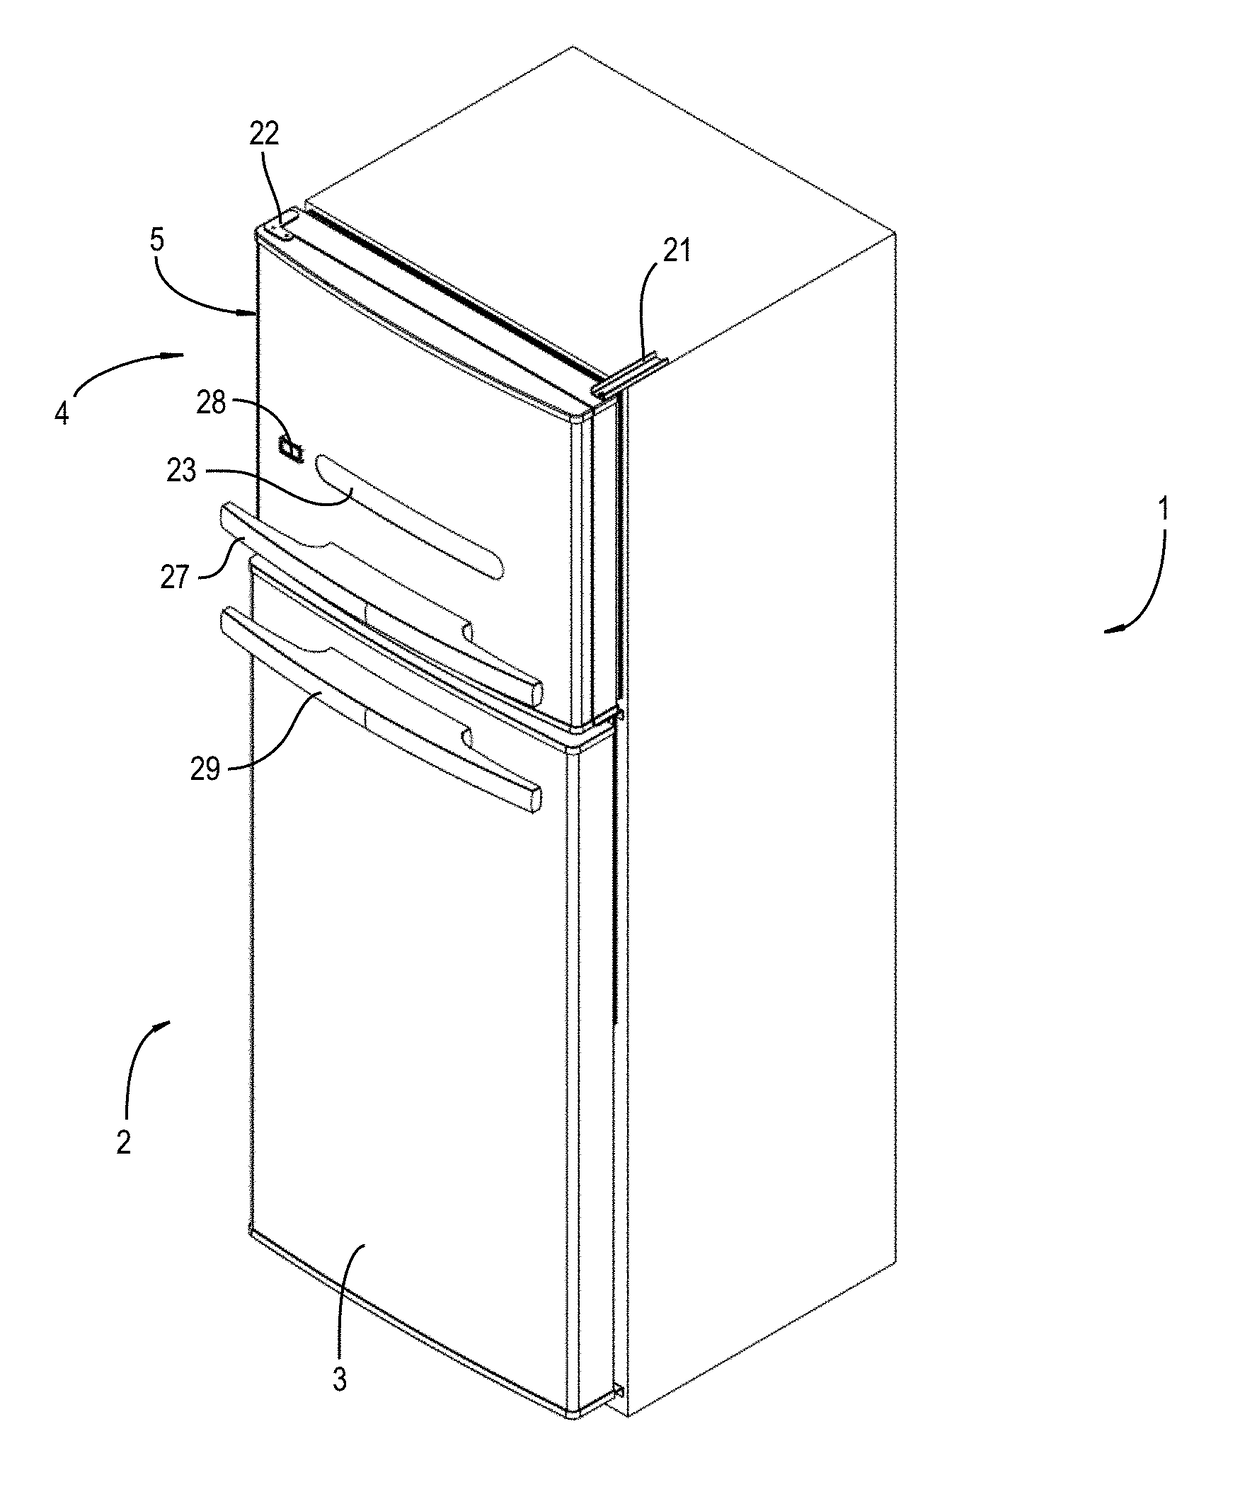 Sectorized cooling arrangement for refrigerators